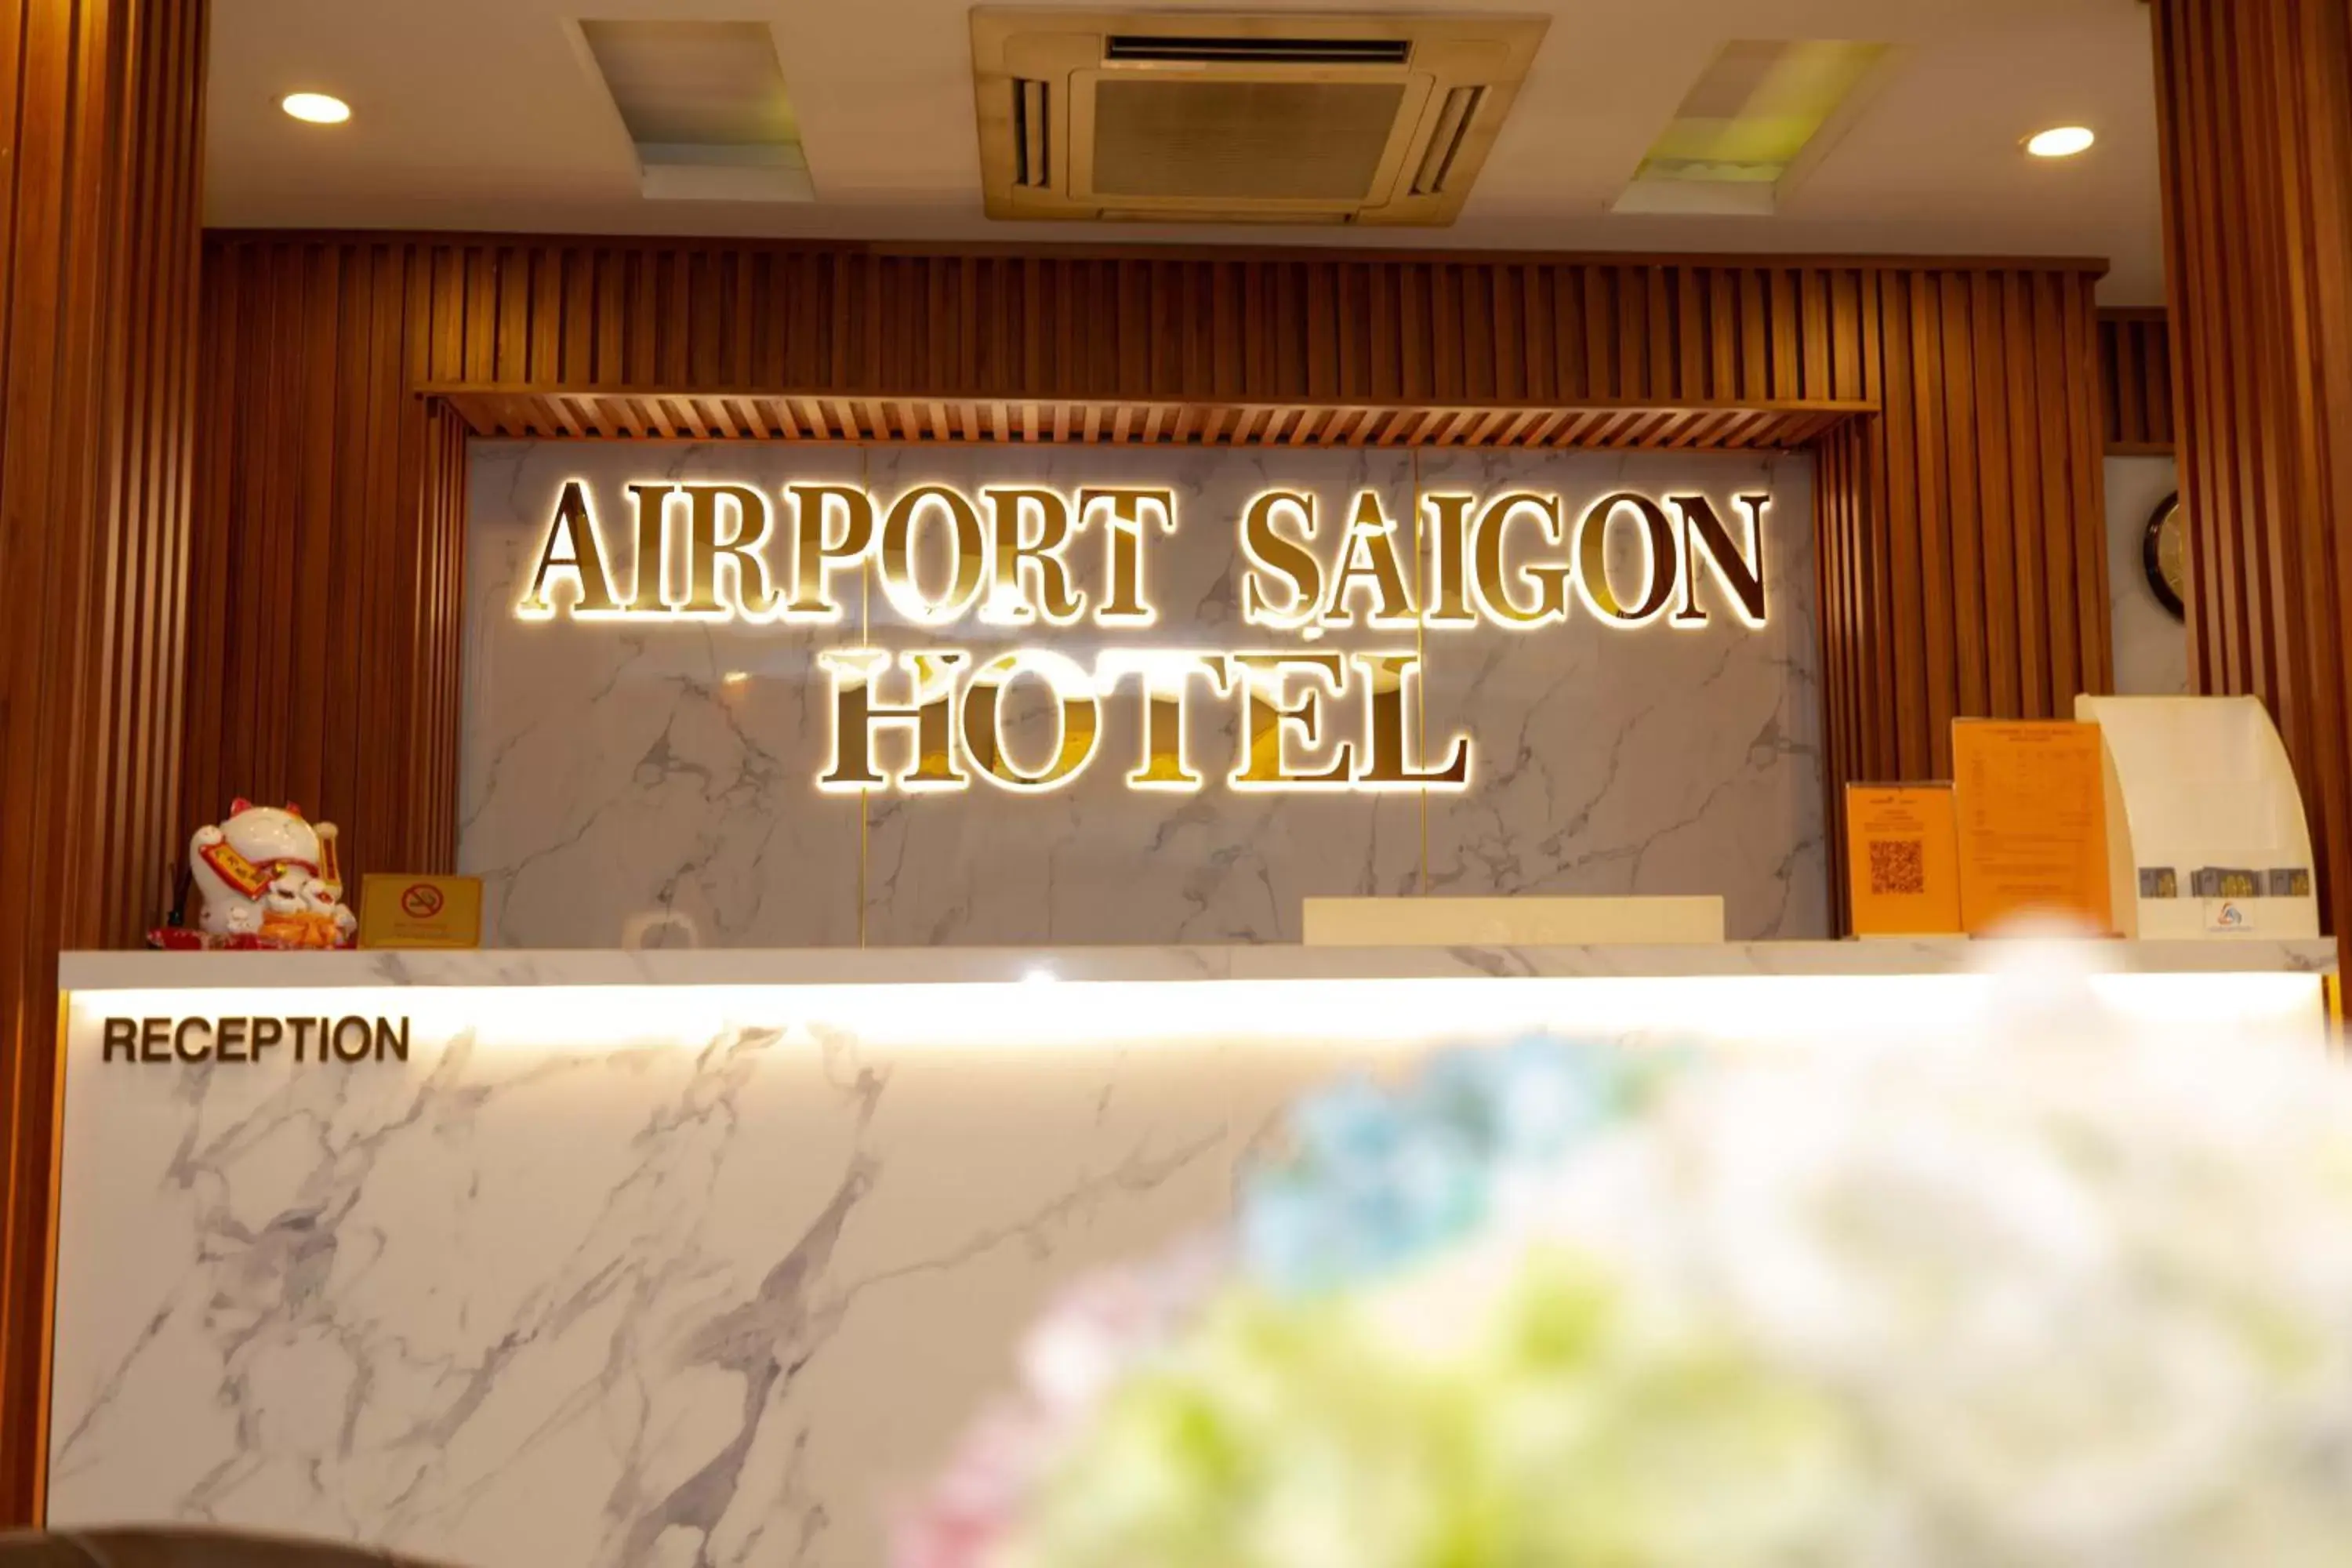 Lobby or reception in Airport Saigon Hotel - Gần ẩm thực đêm chợ Phạm Văn Hai